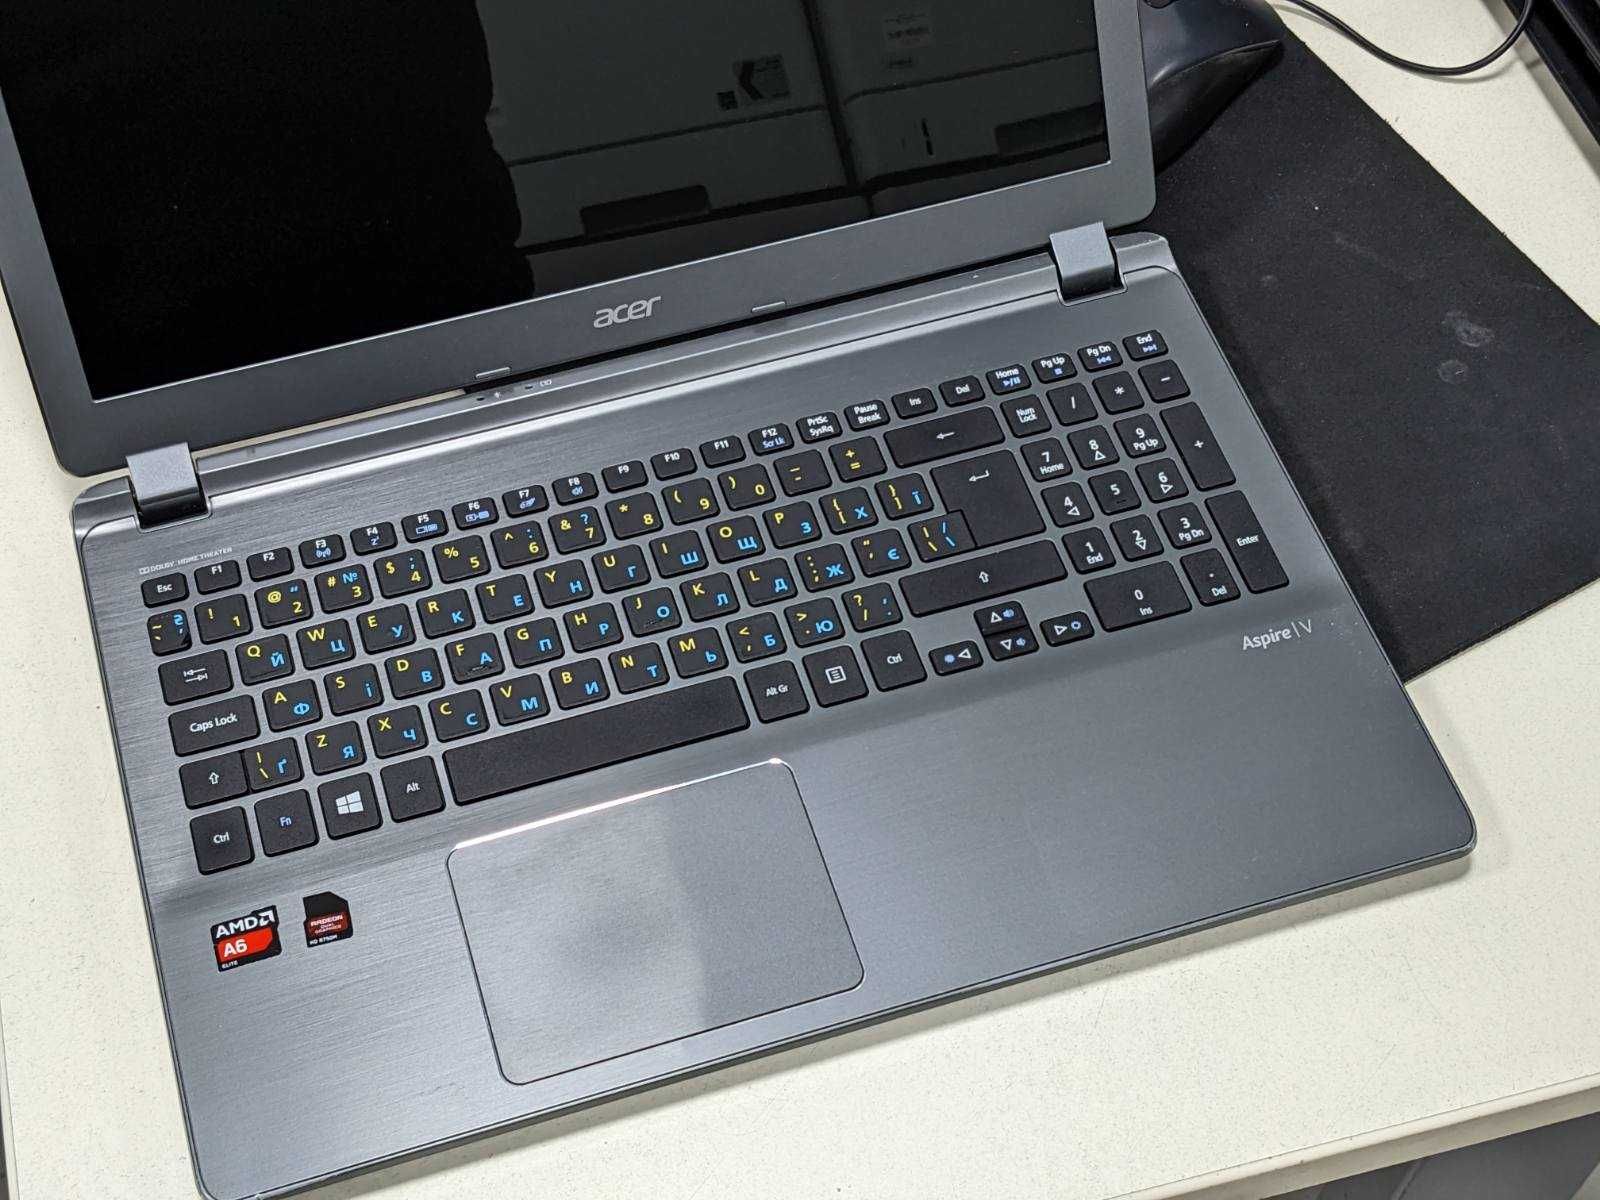 Ноутбук Acer Aspire V5-552G